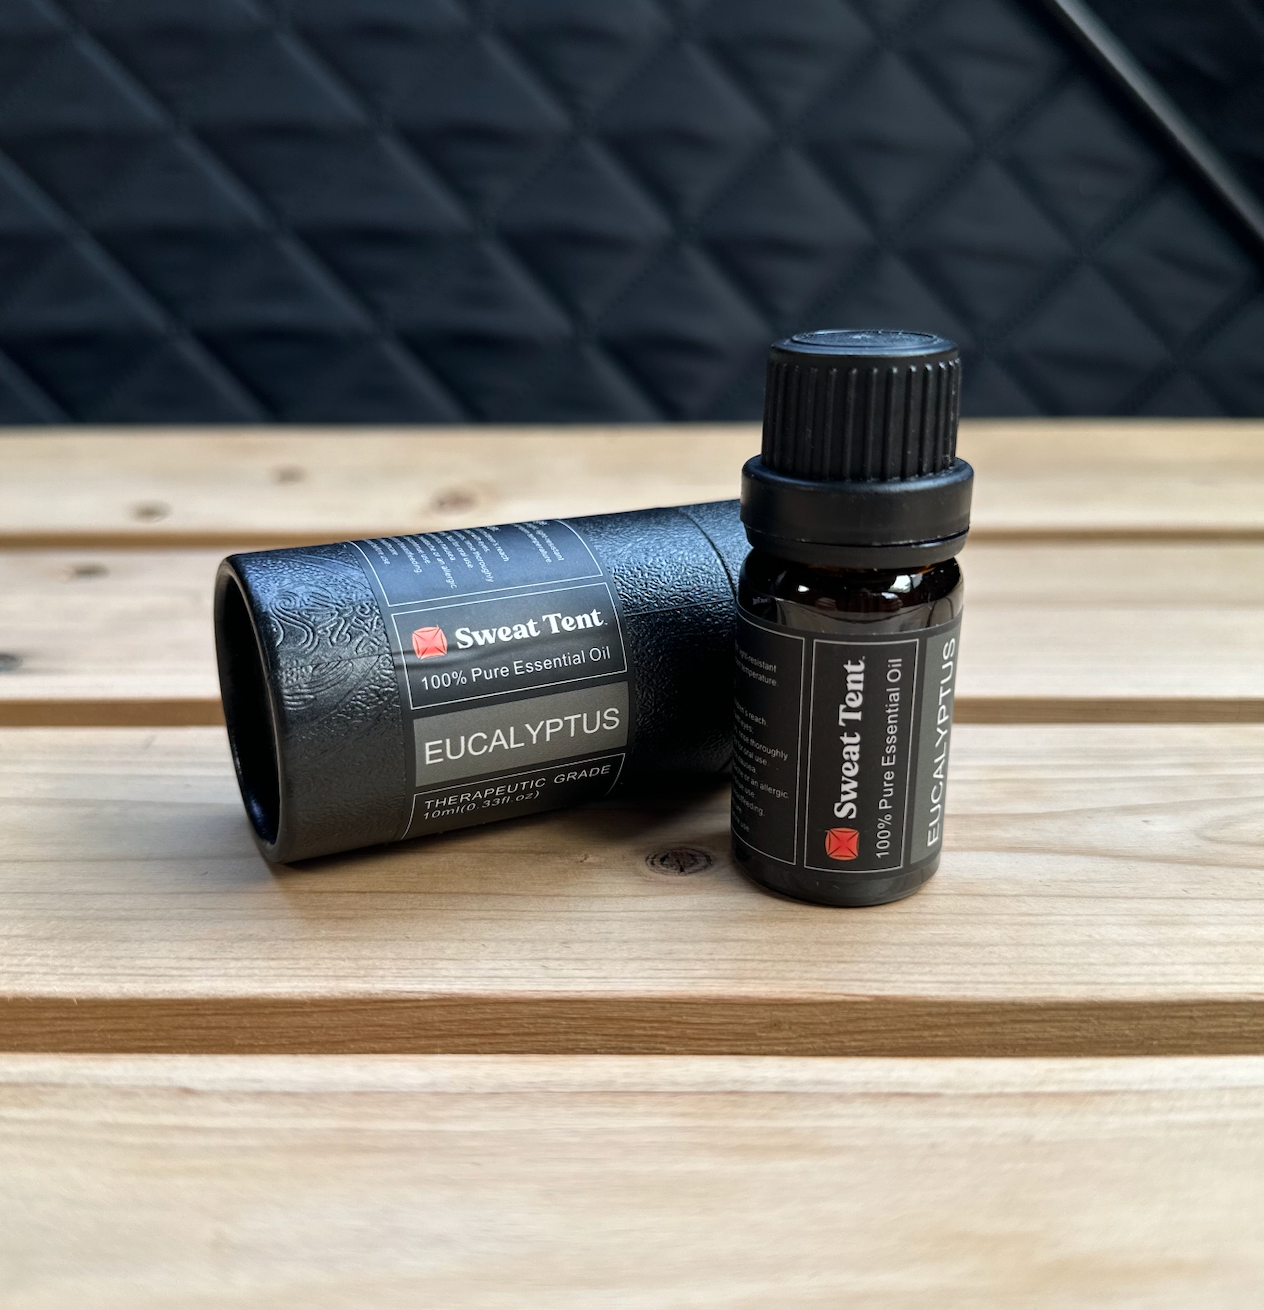 a bottle of eucalyptus essential oil for sauna use